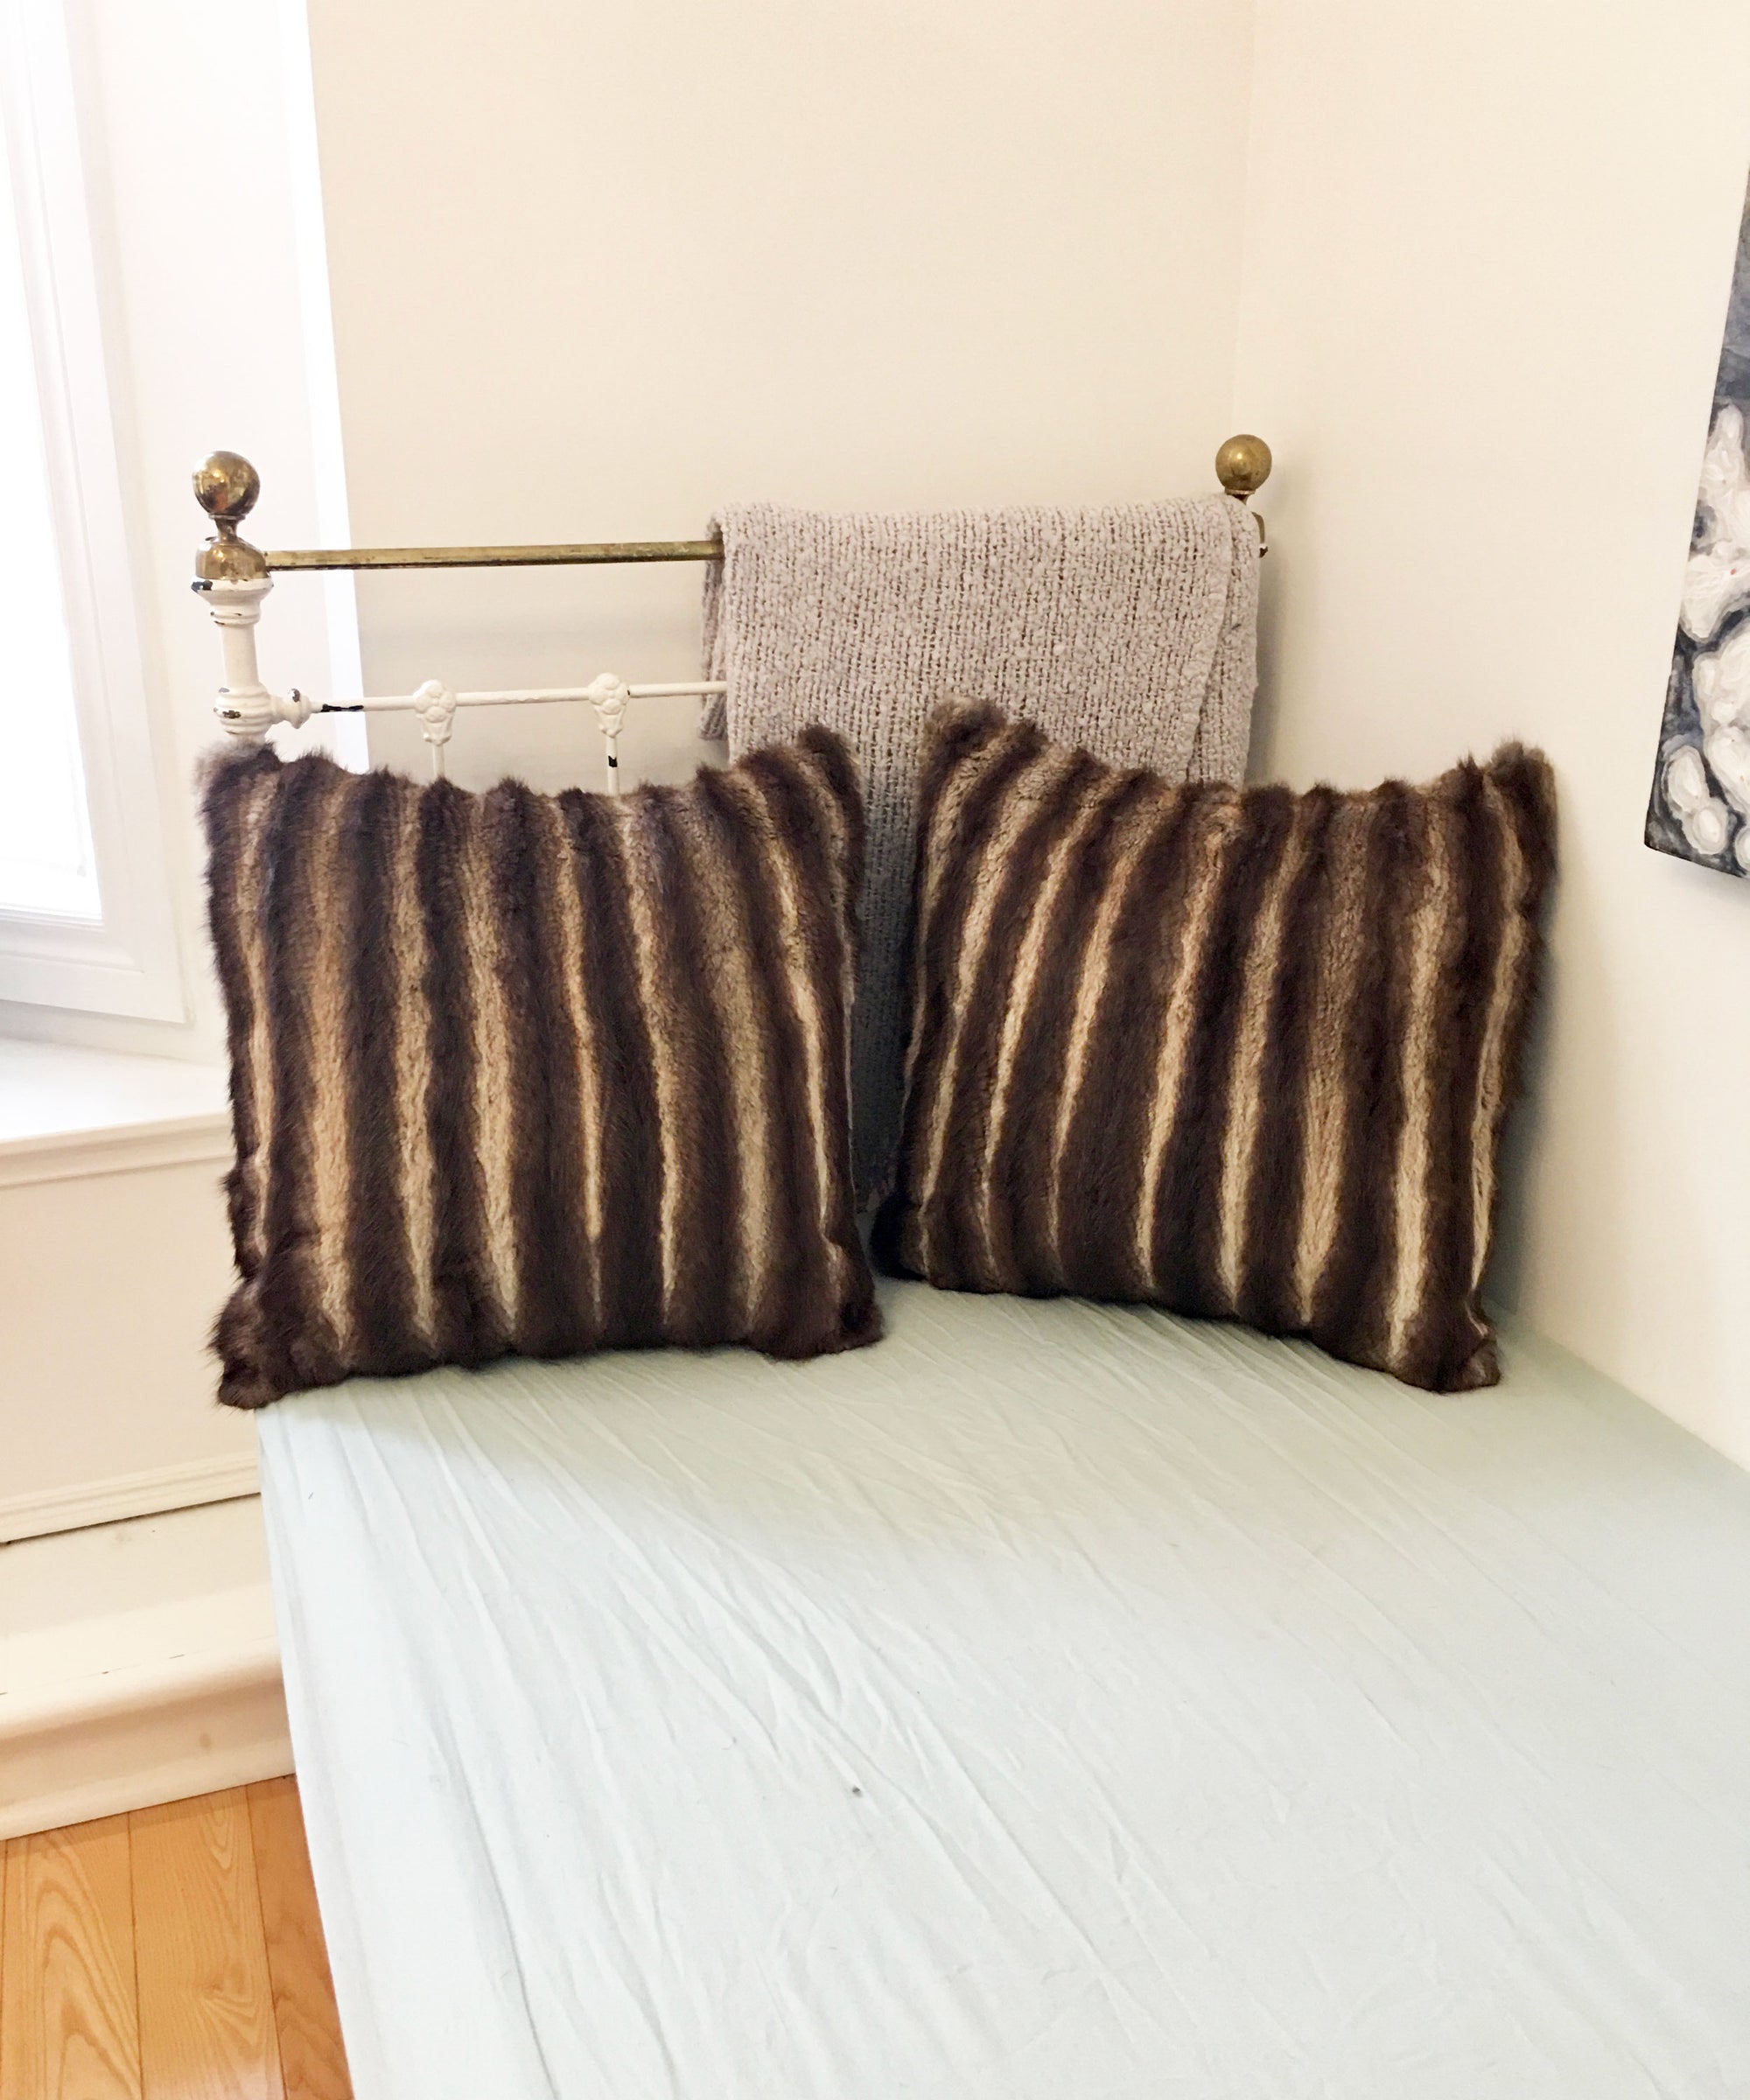 Reclaimed Striped Fur Pillow 22 x 22"